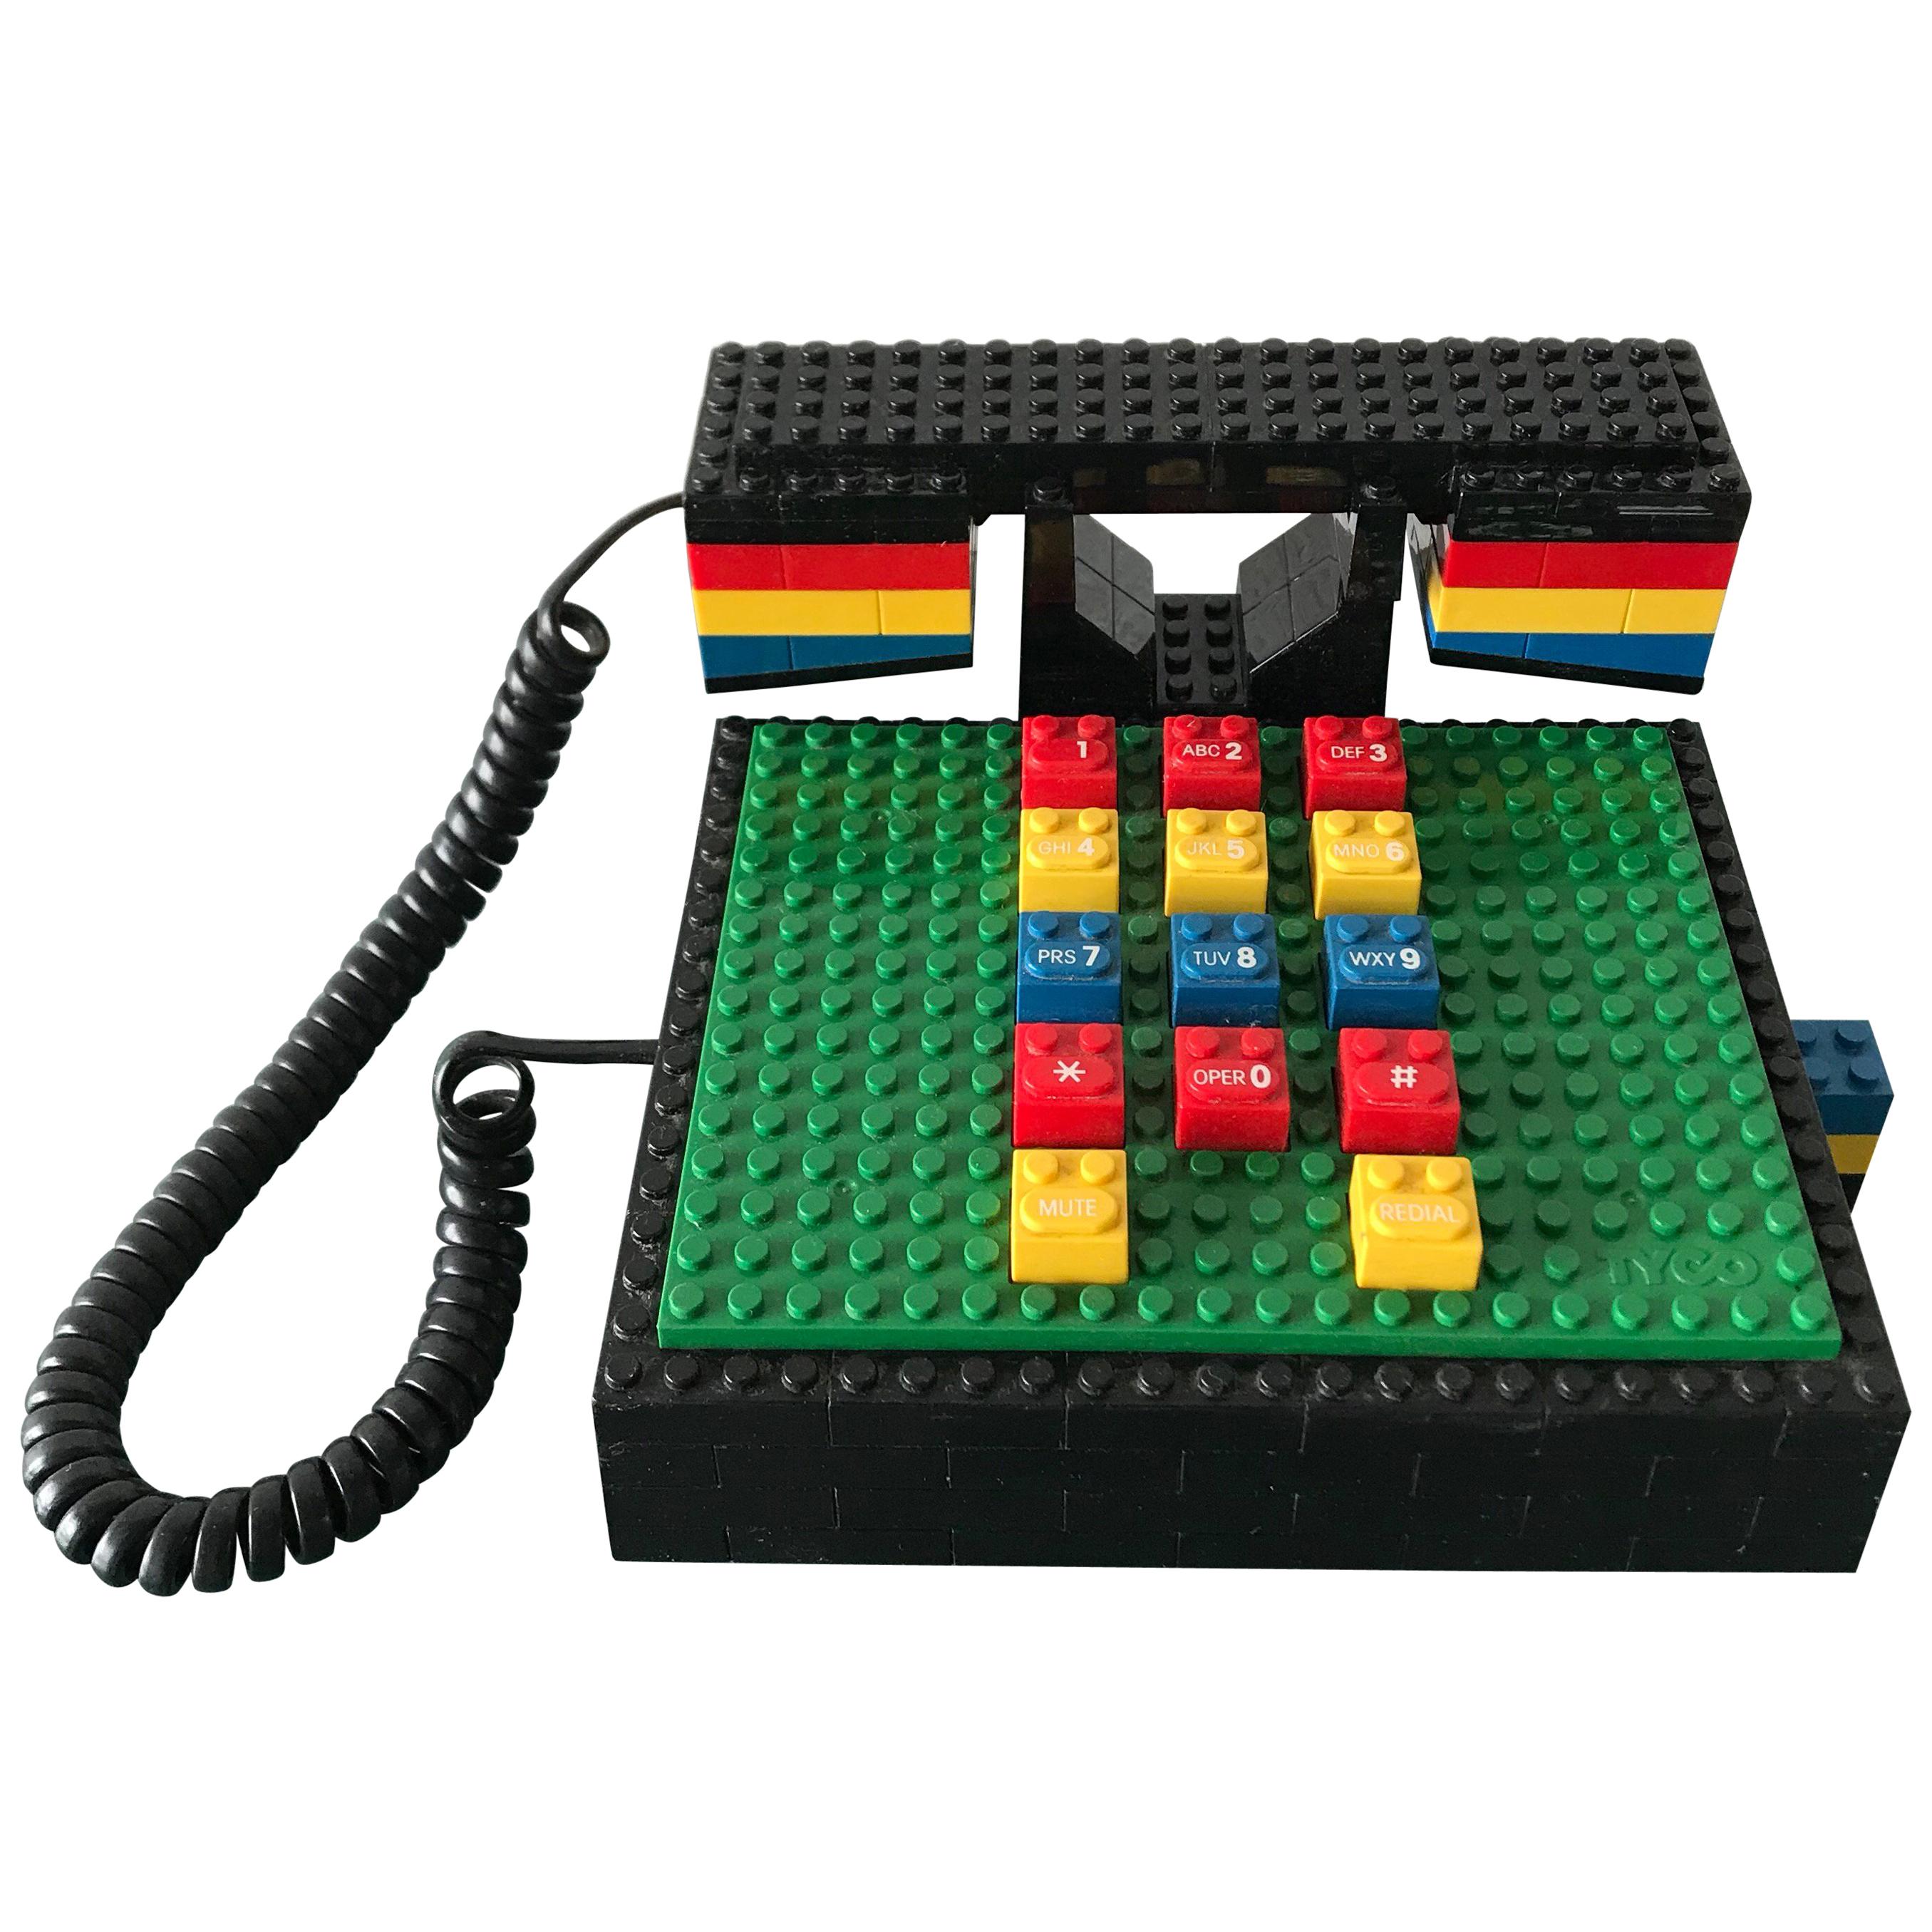 Postmodern “LEGO” Telephone, Phone by Tyco